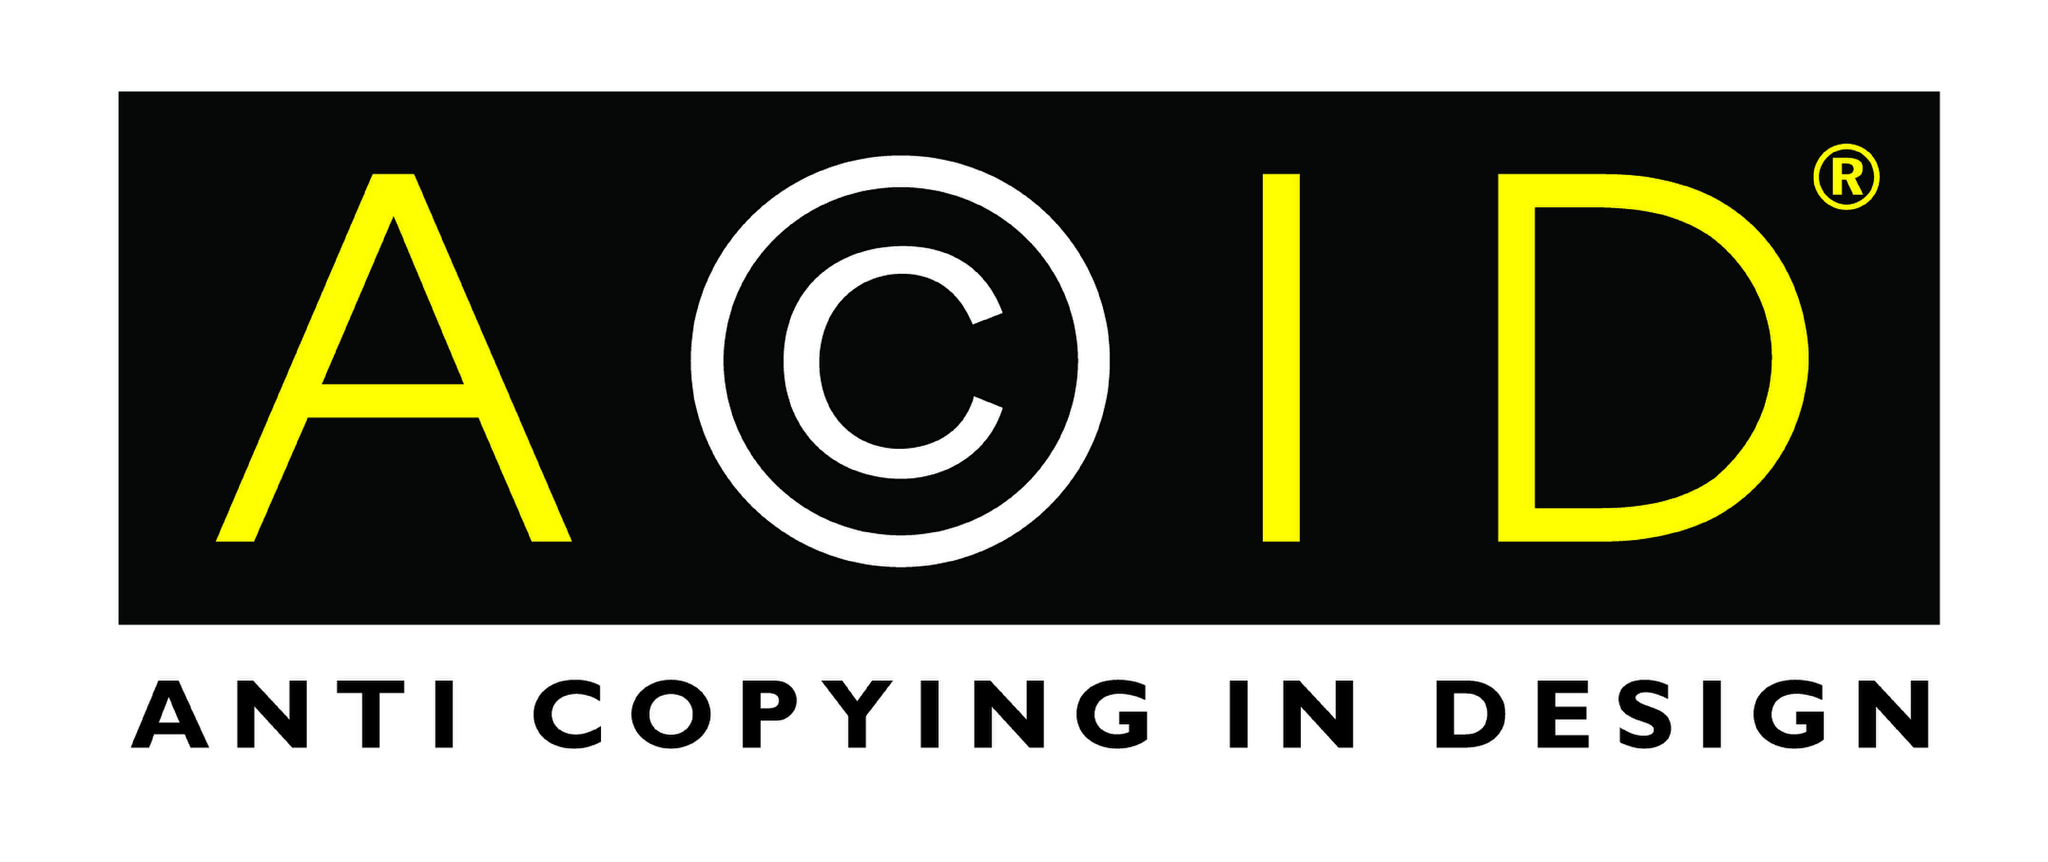 ACID (Anti Copying in Design) Ltd